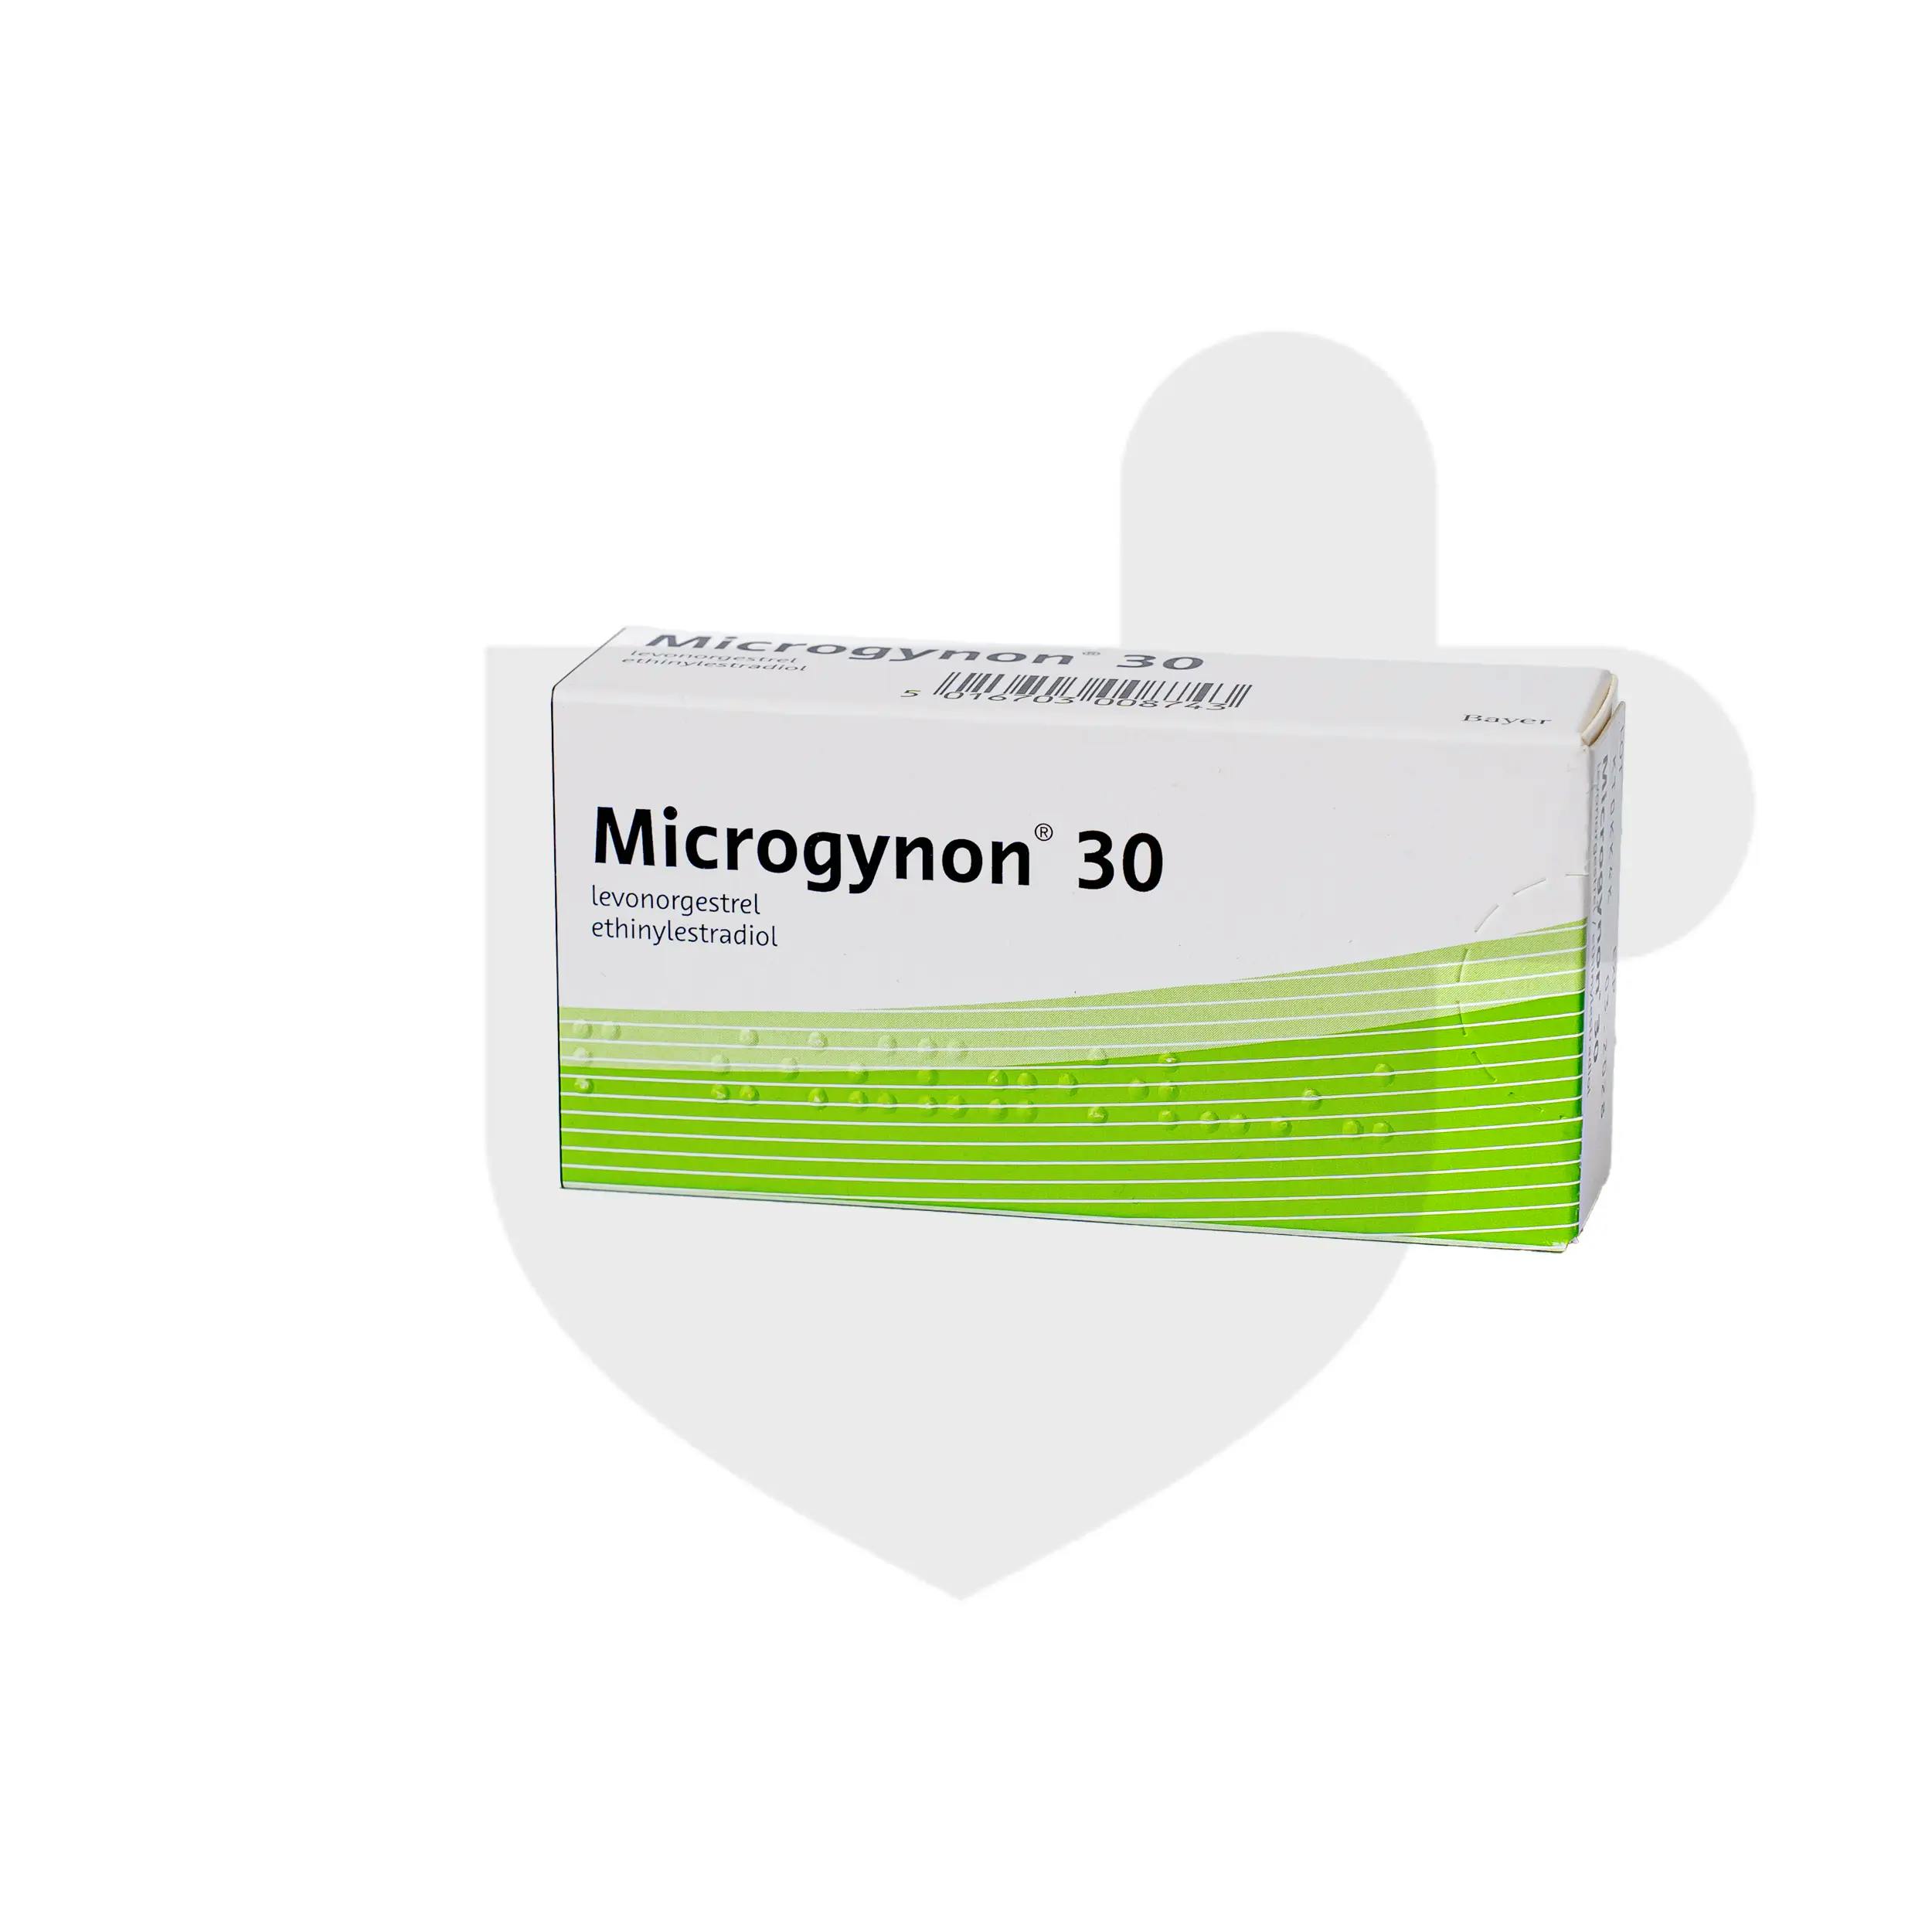 MICROGYNON 30 <sup class="brand-mark">®</sup>